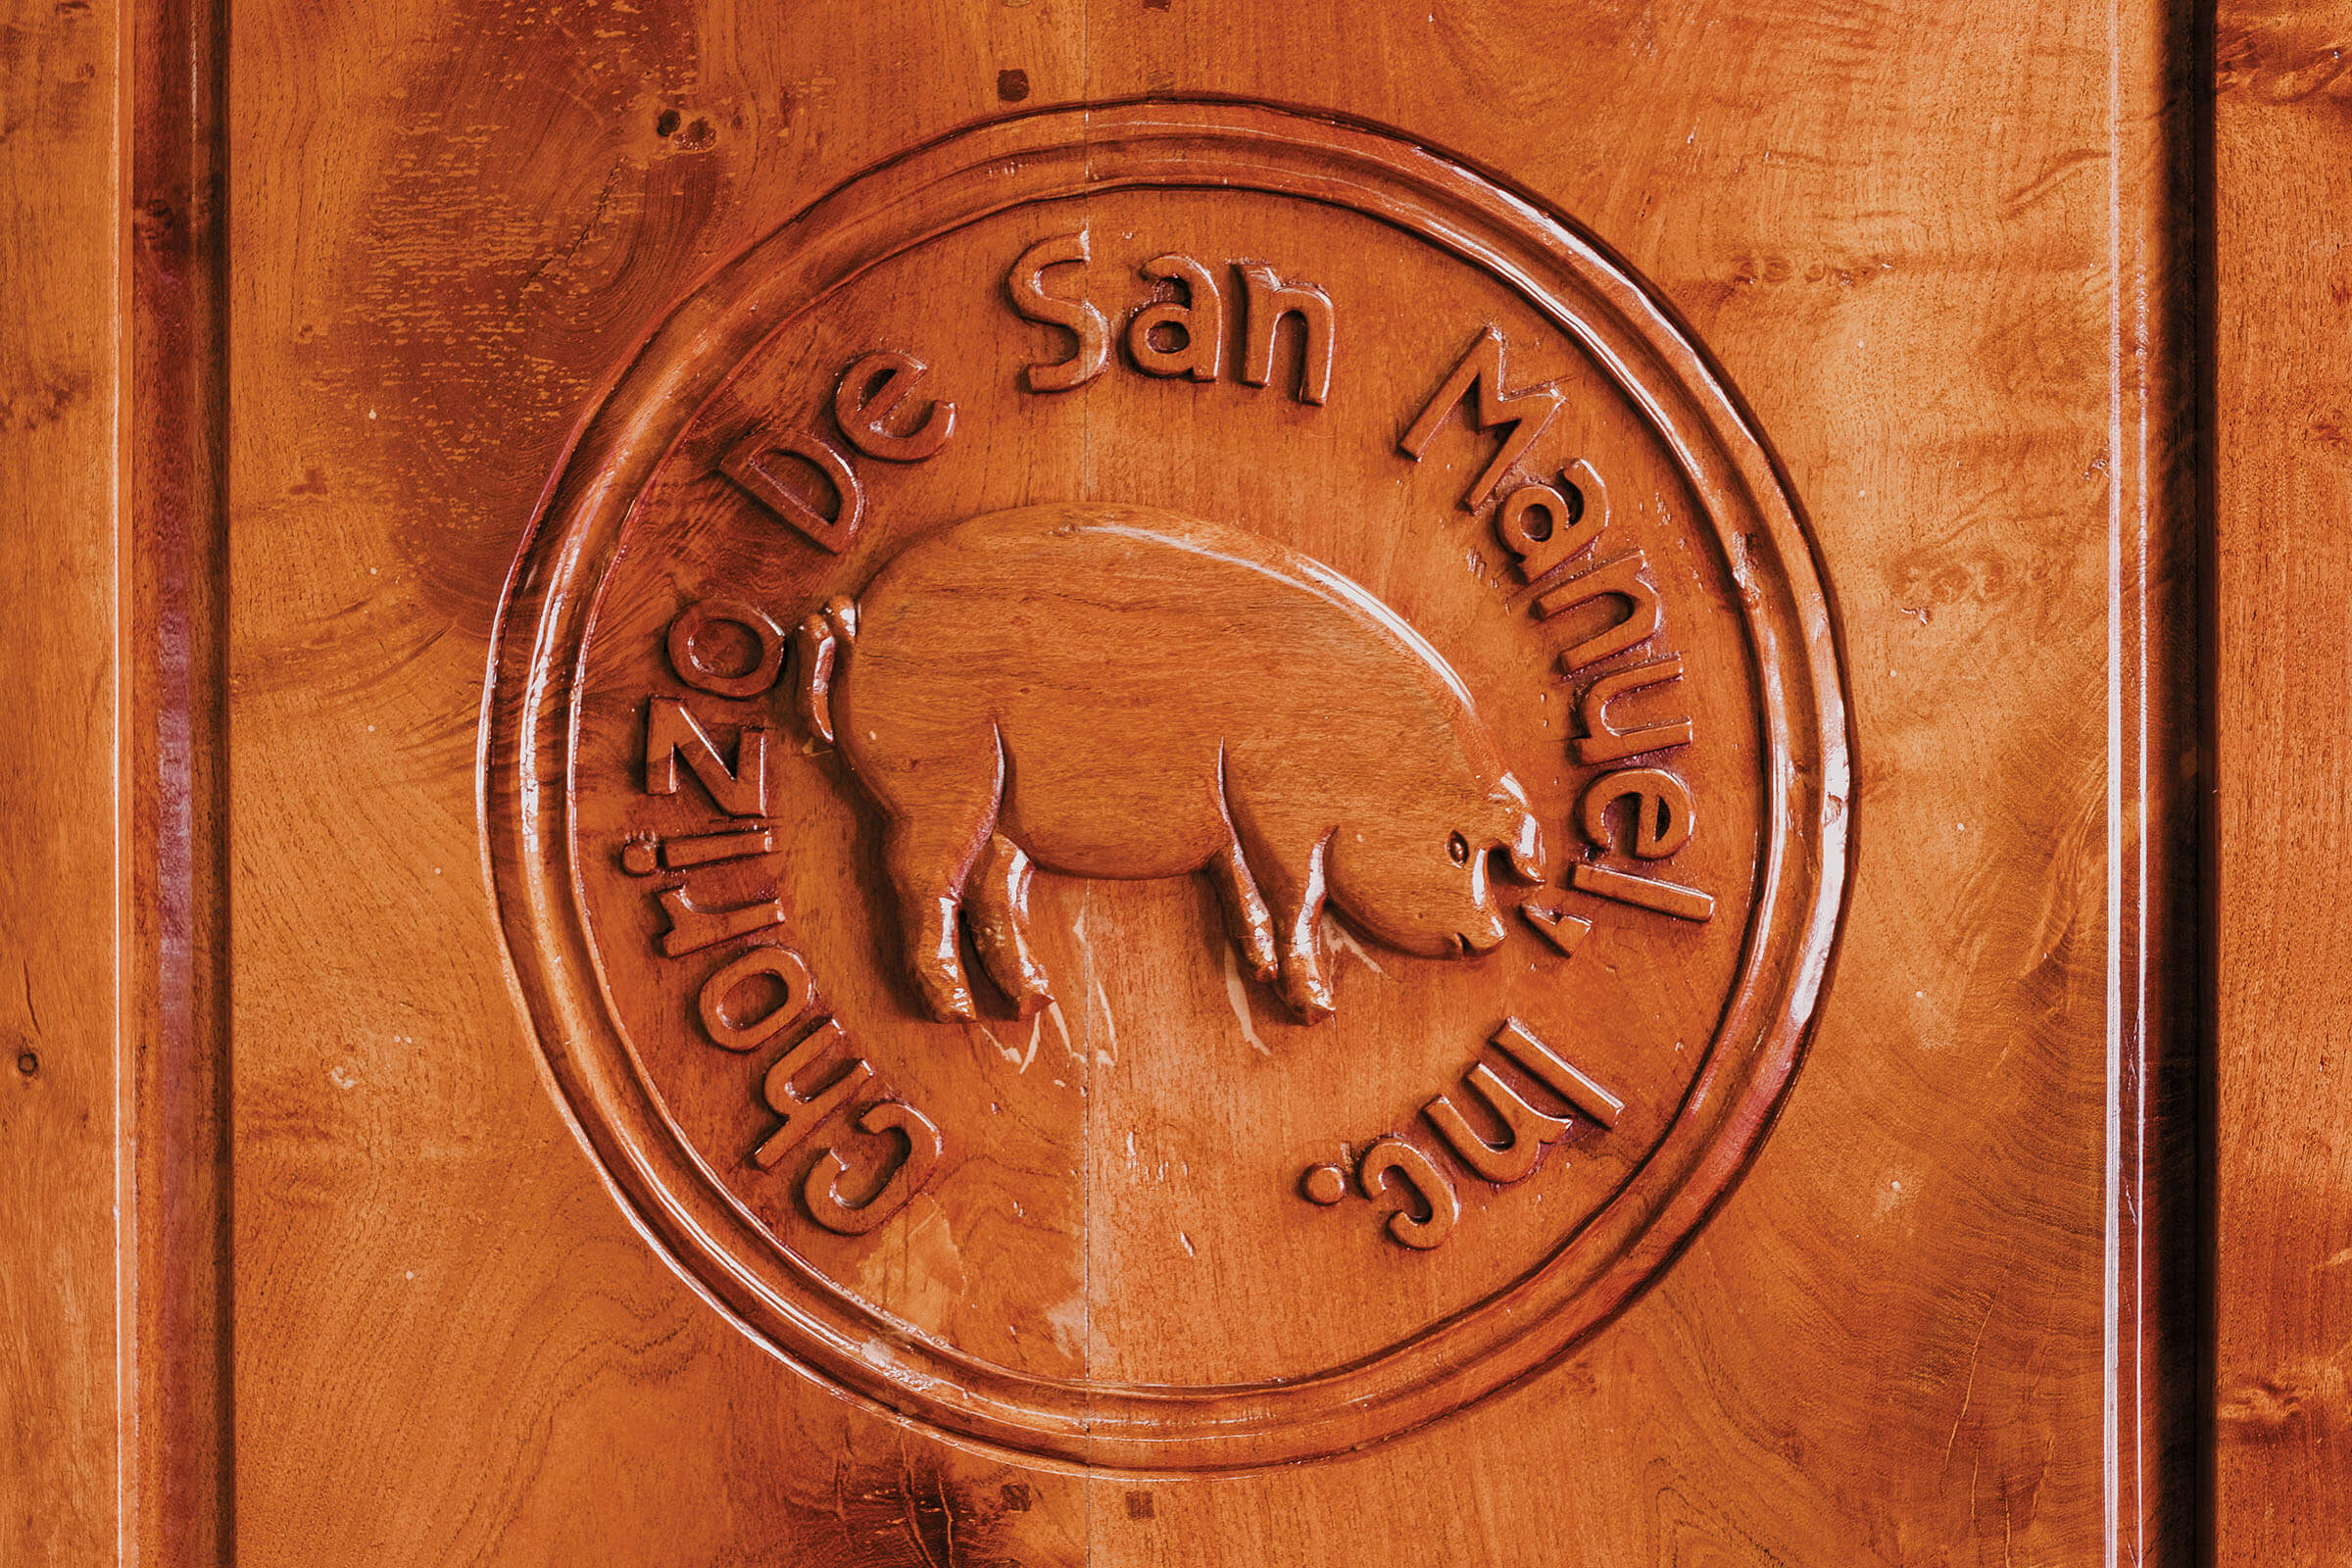 A leather stamped logo for Chorizo de San Manuel